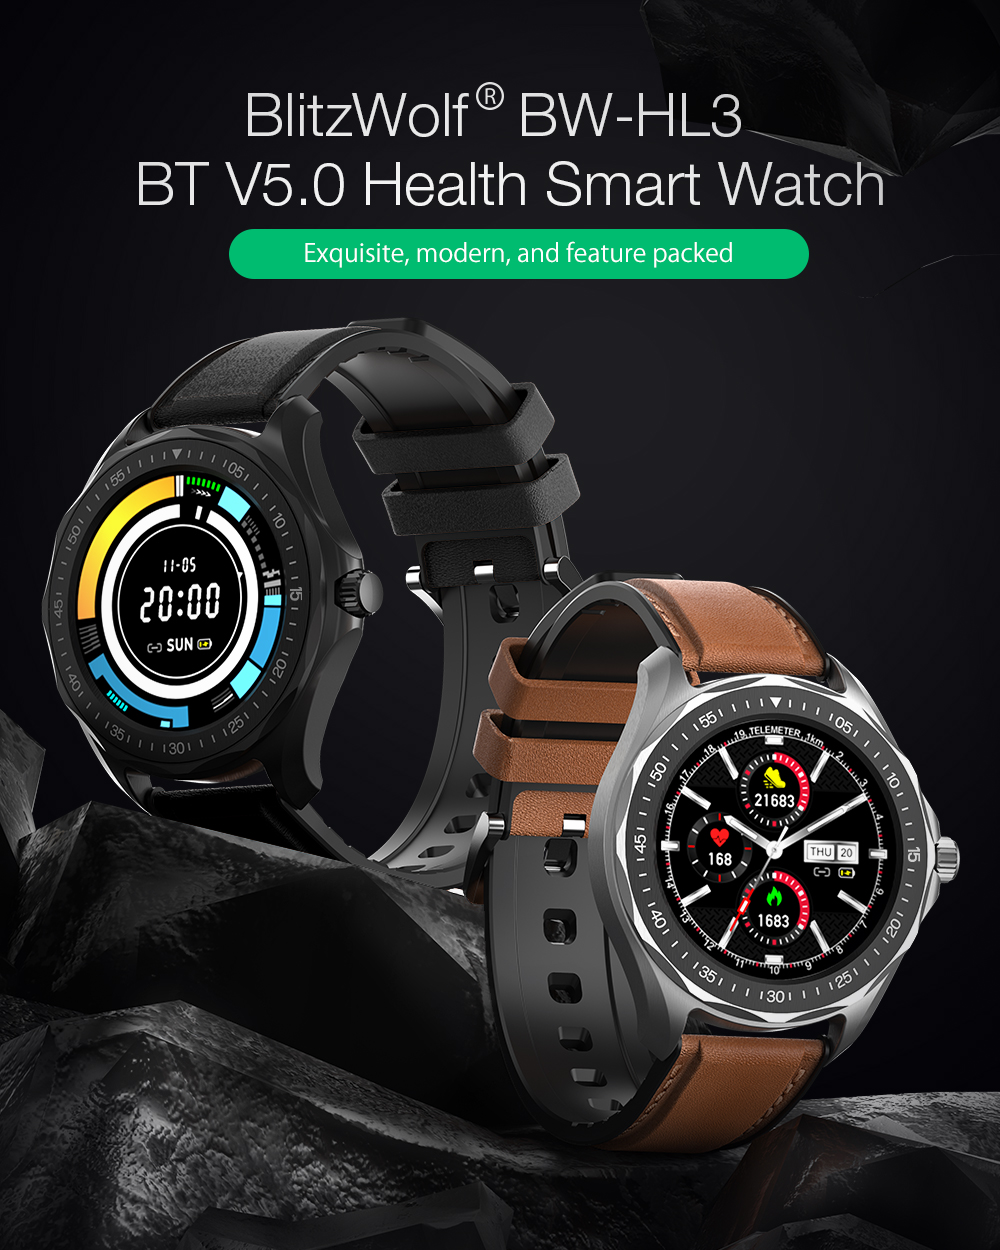 Blitzwolf BW-HL3 smart watch